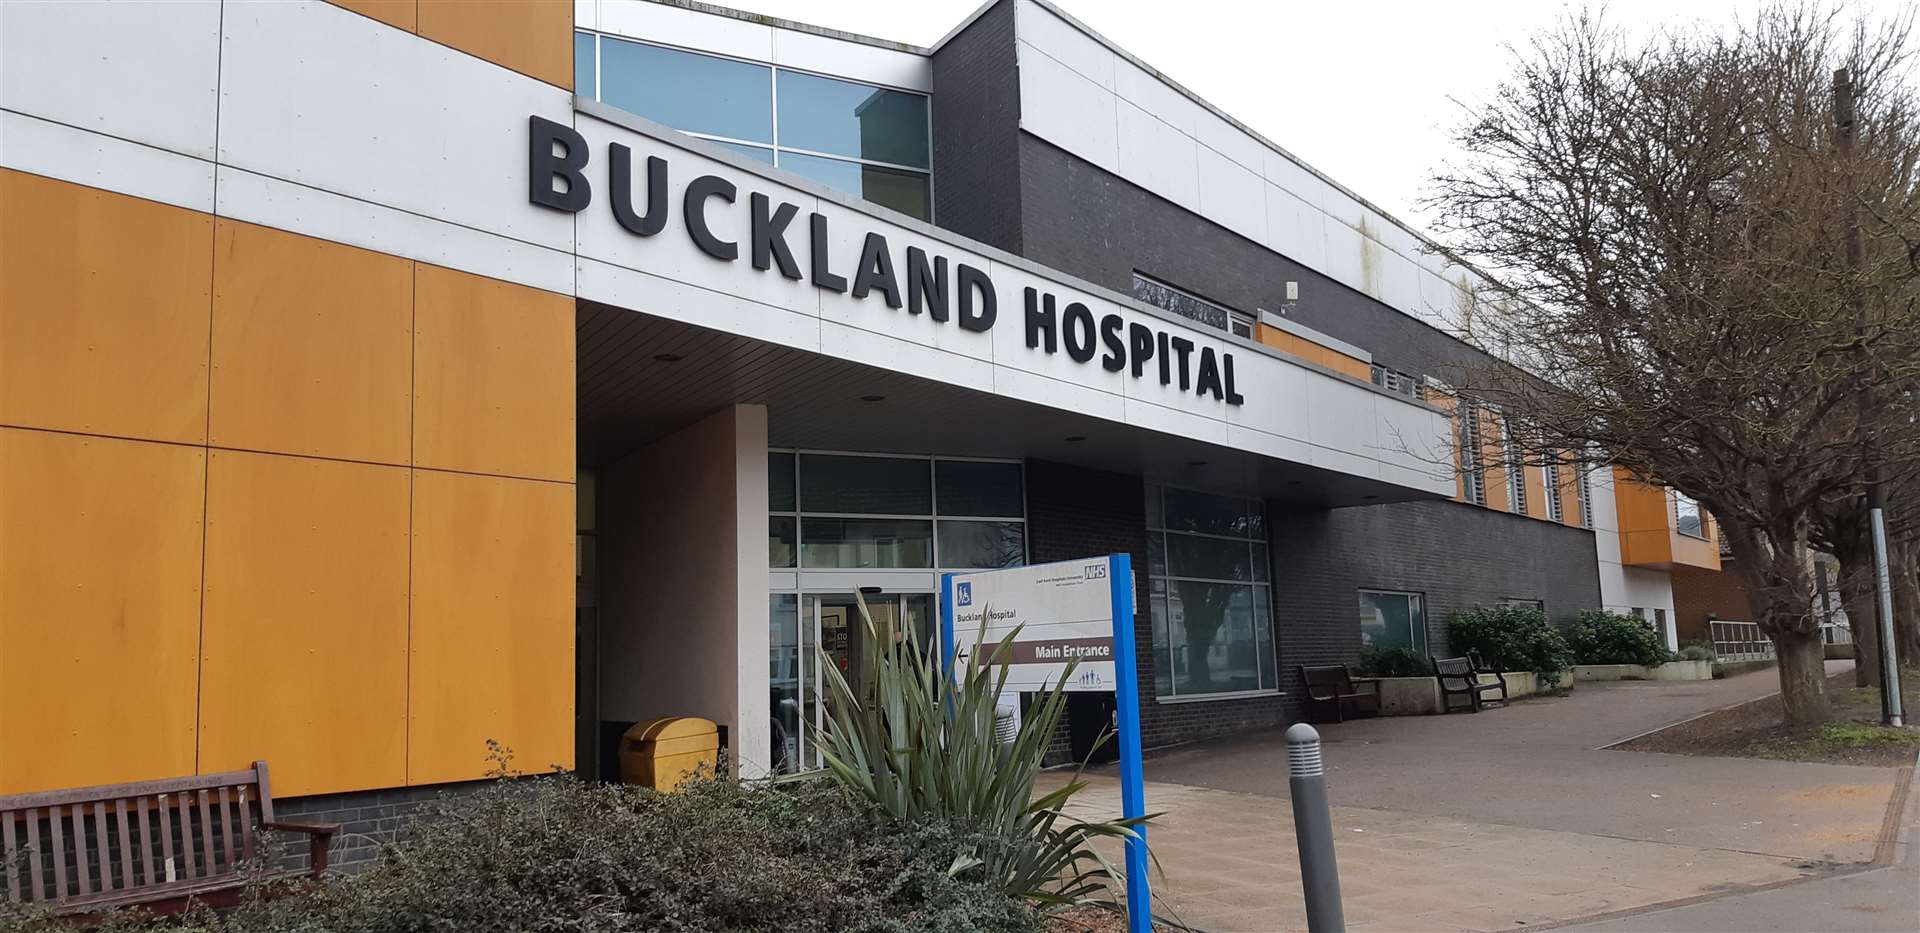 Buckland Hospital in Dover